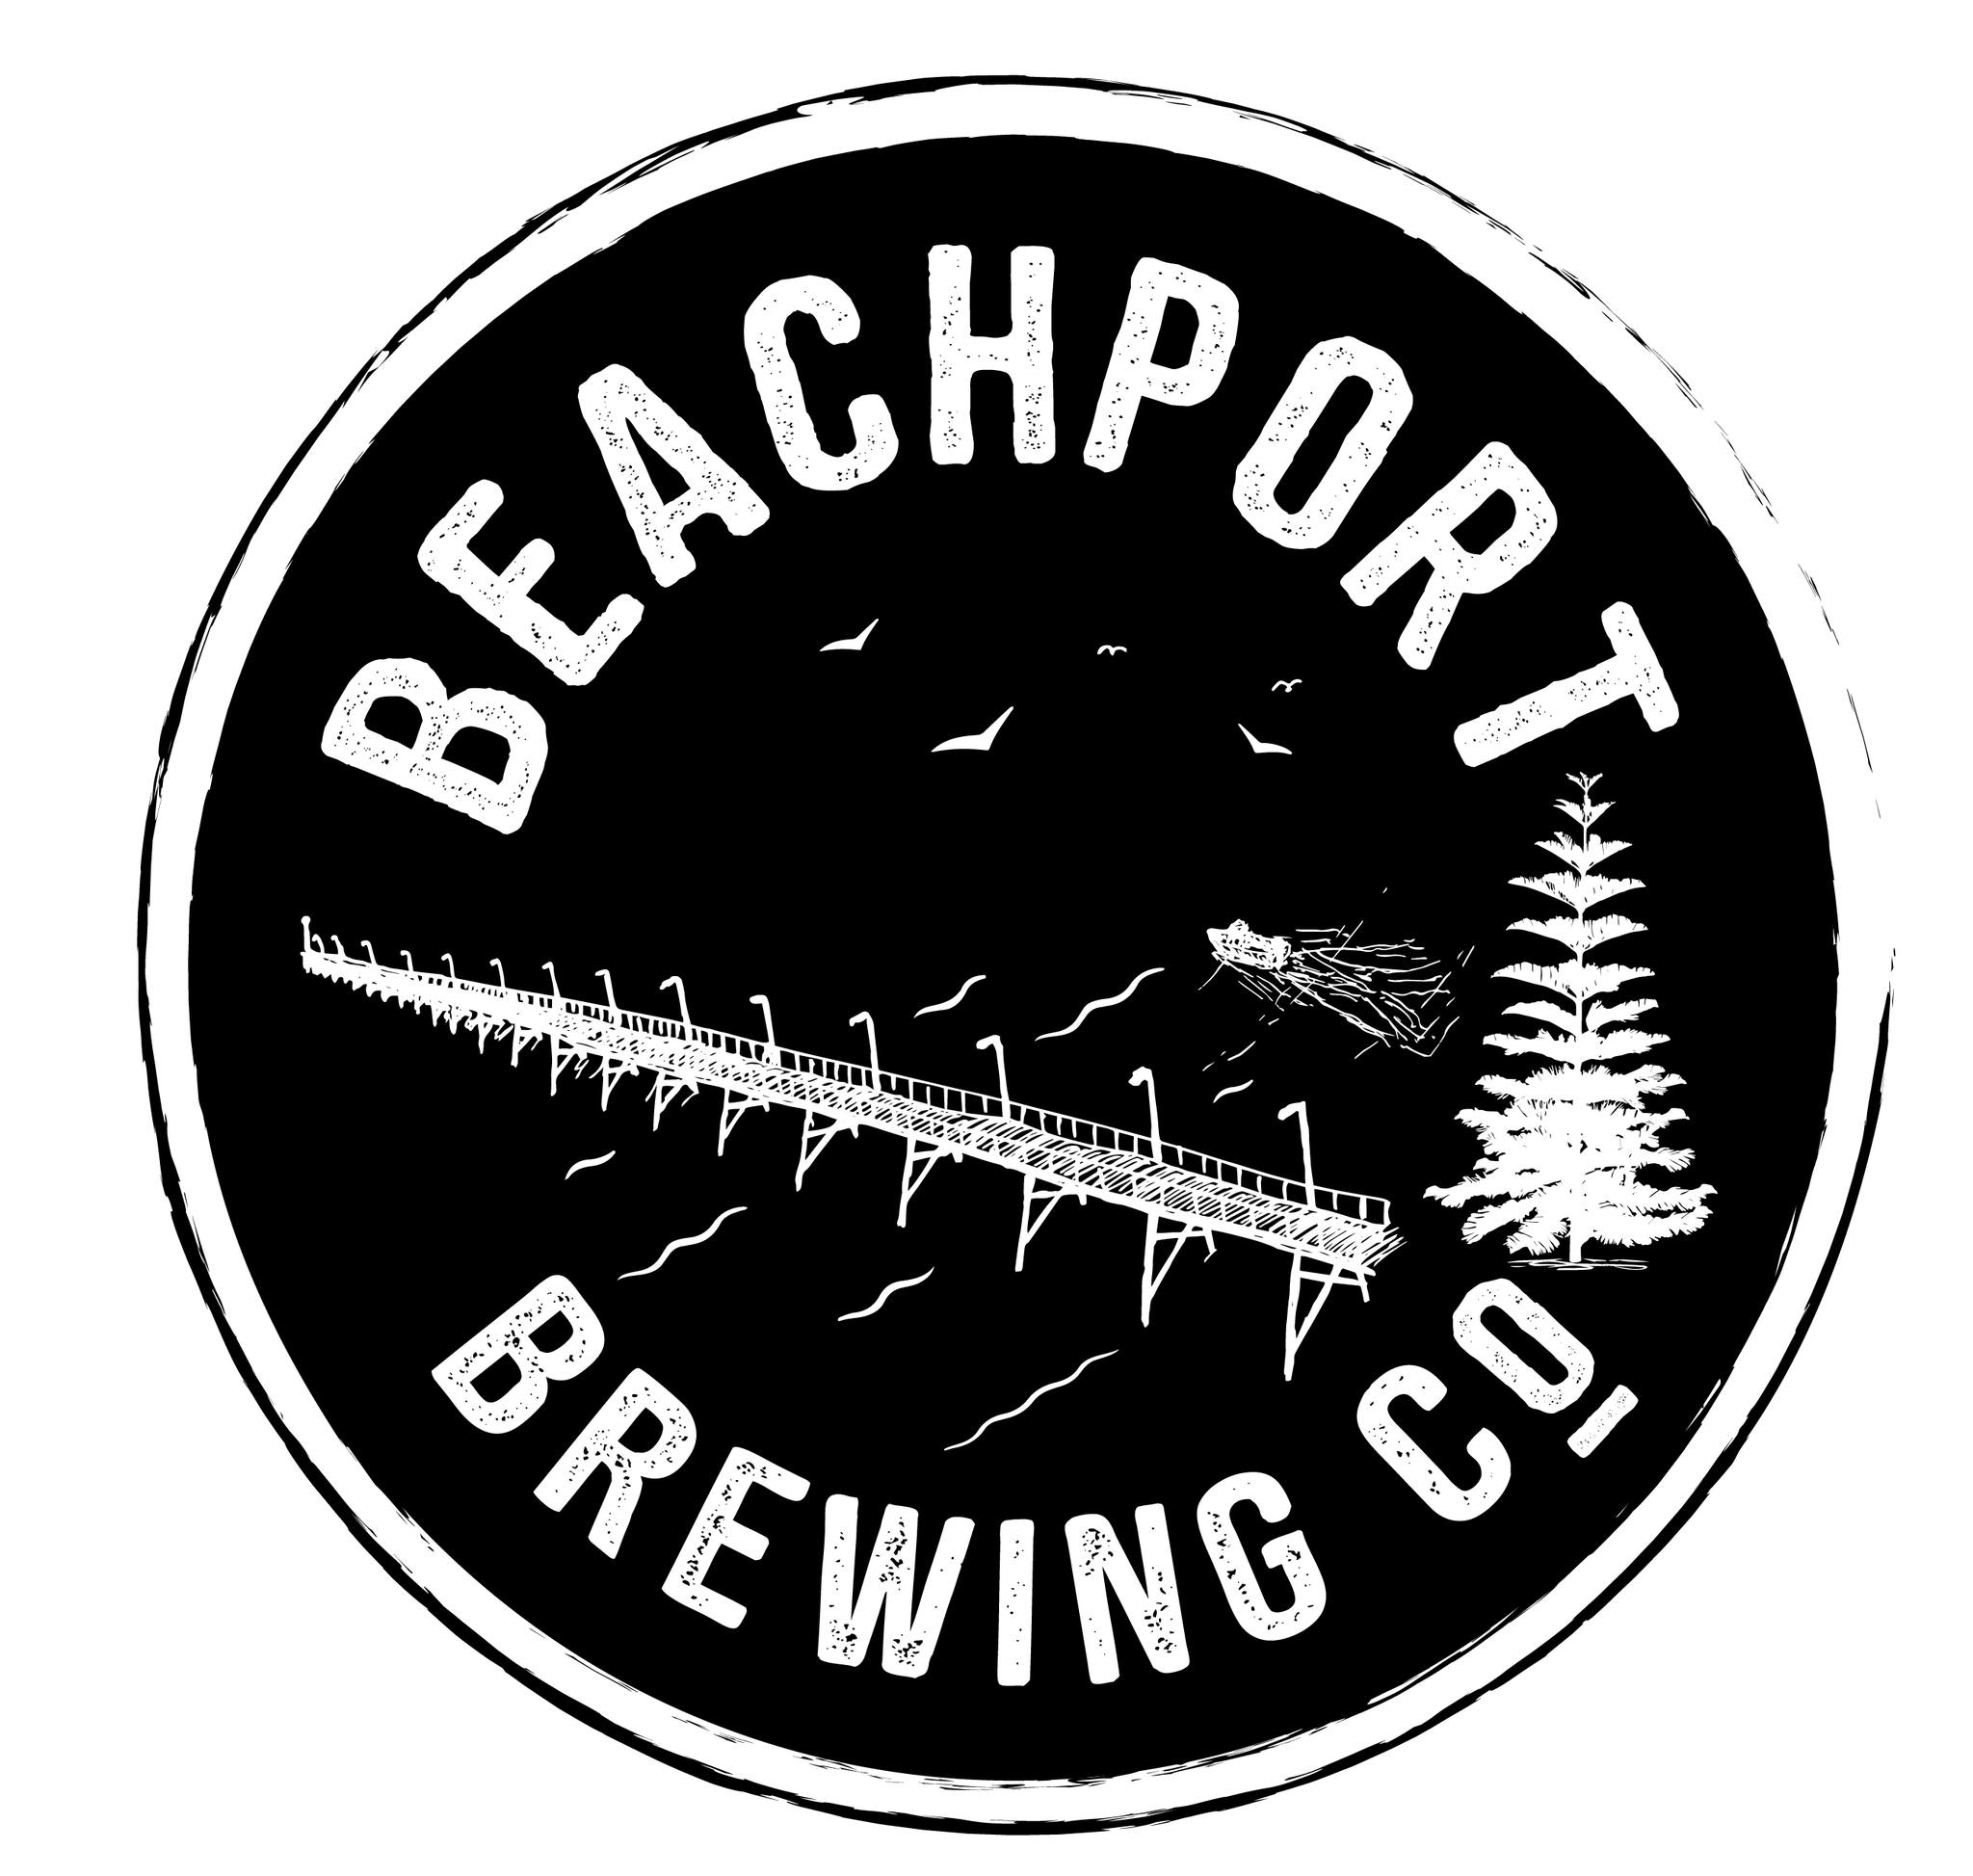 Beachport Brewing Co